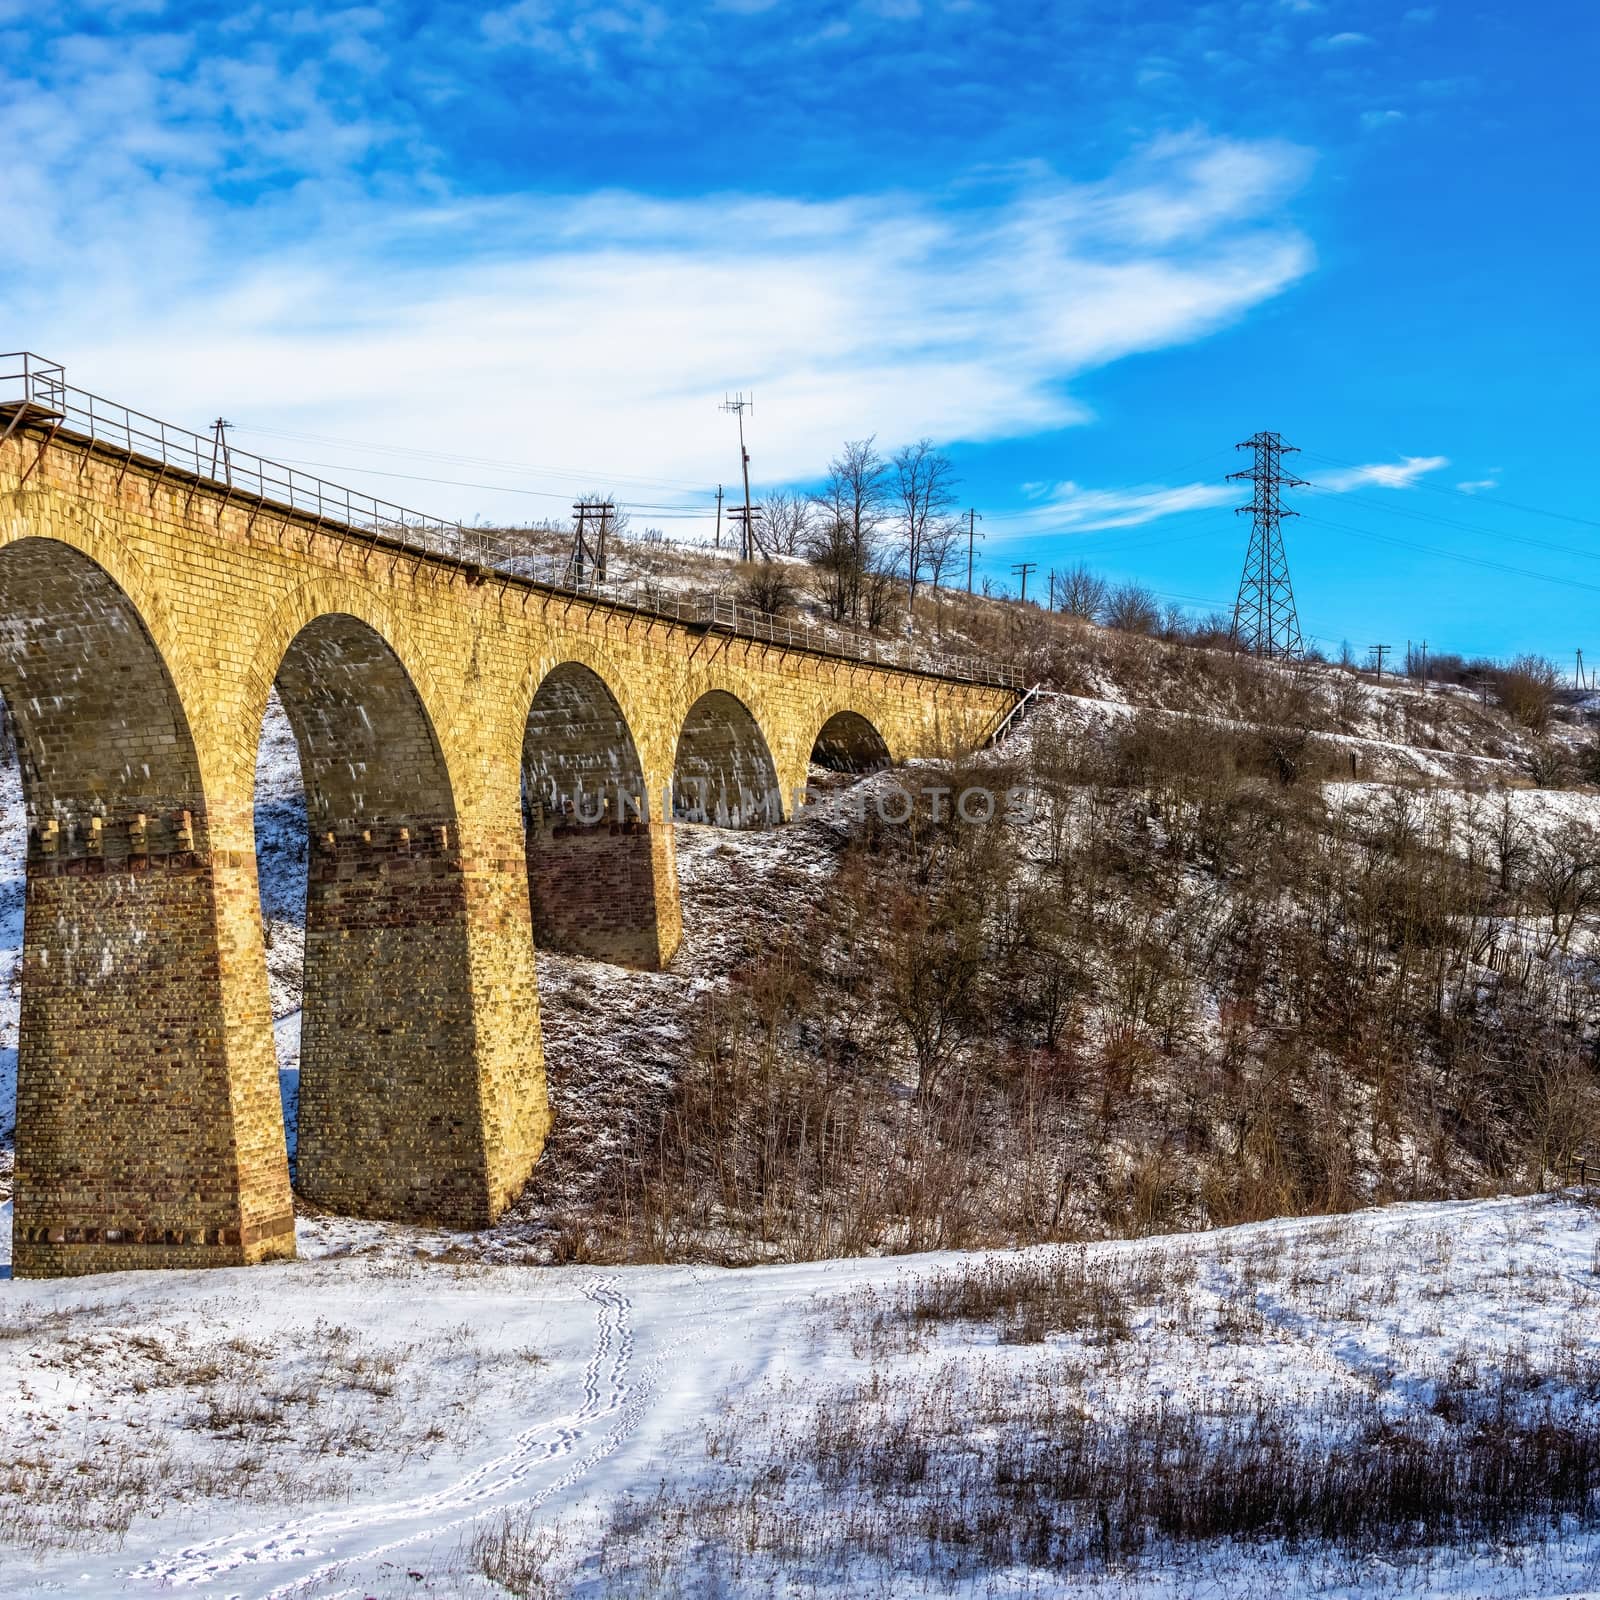 Viaduct in Plebanivka village, Ukraine by Multipedia